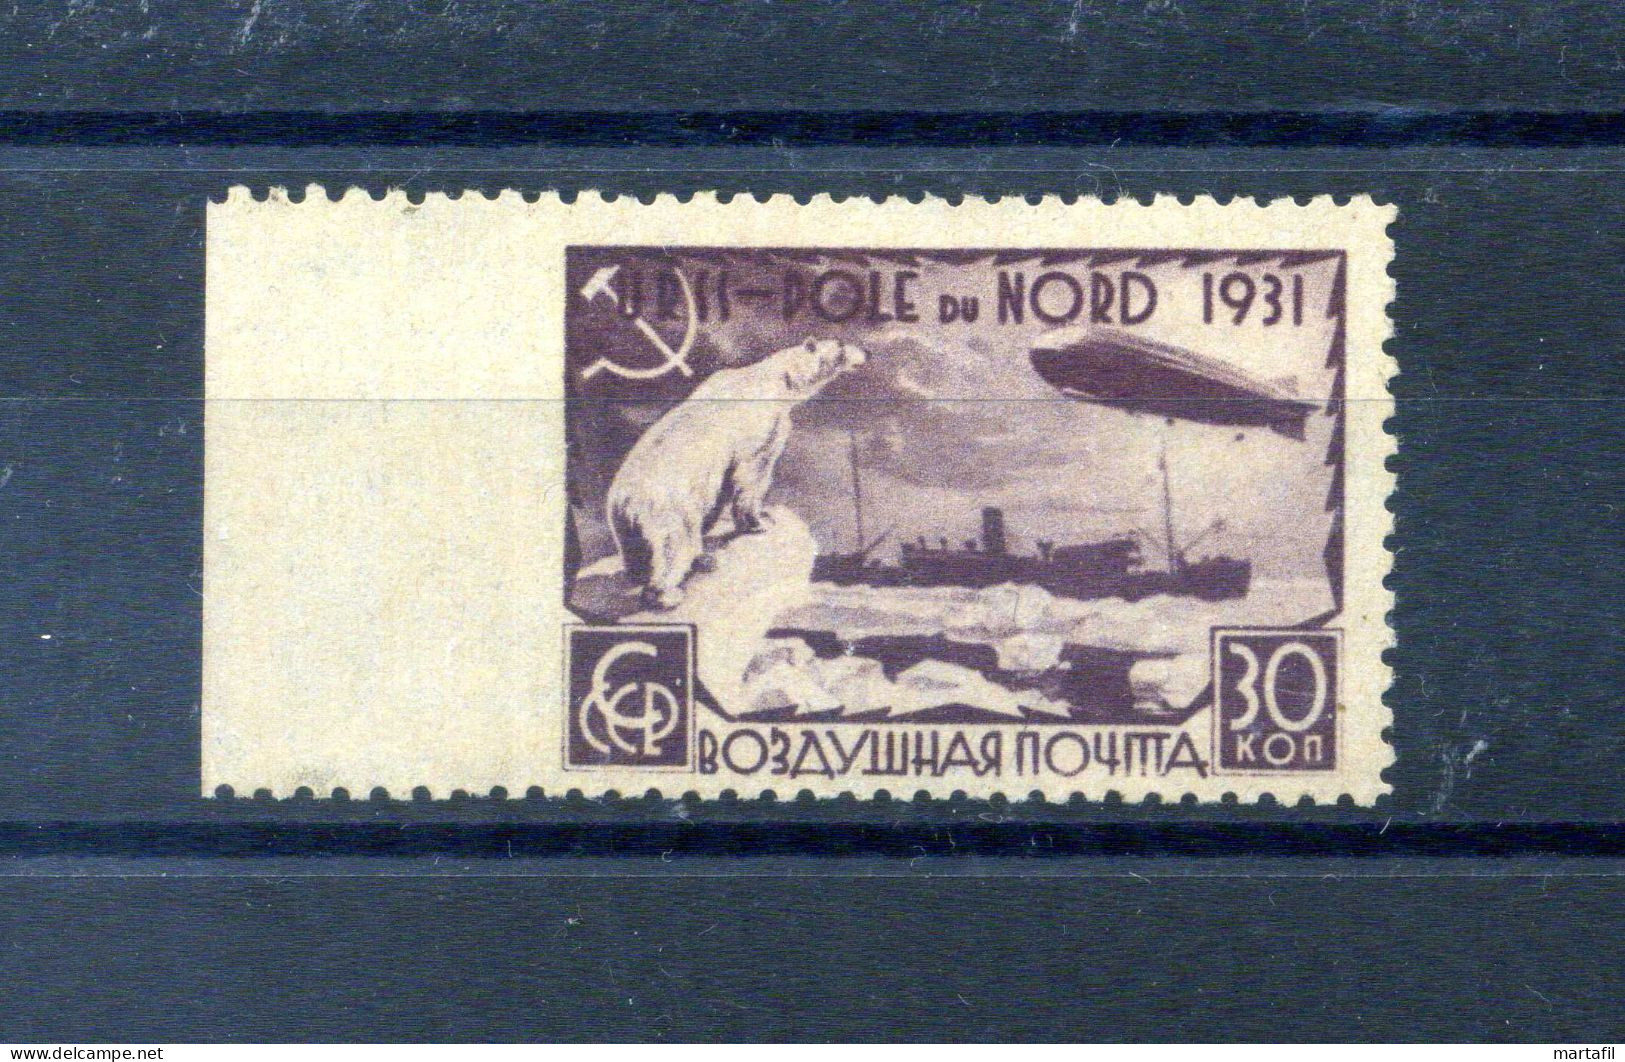 1931 URSS A27 30k. MNH ** Varietà - Non Dentellato A Sinistra - Timbrino Kubler - Graf Zeppelin Polo Nord - Varietà E Curiosità